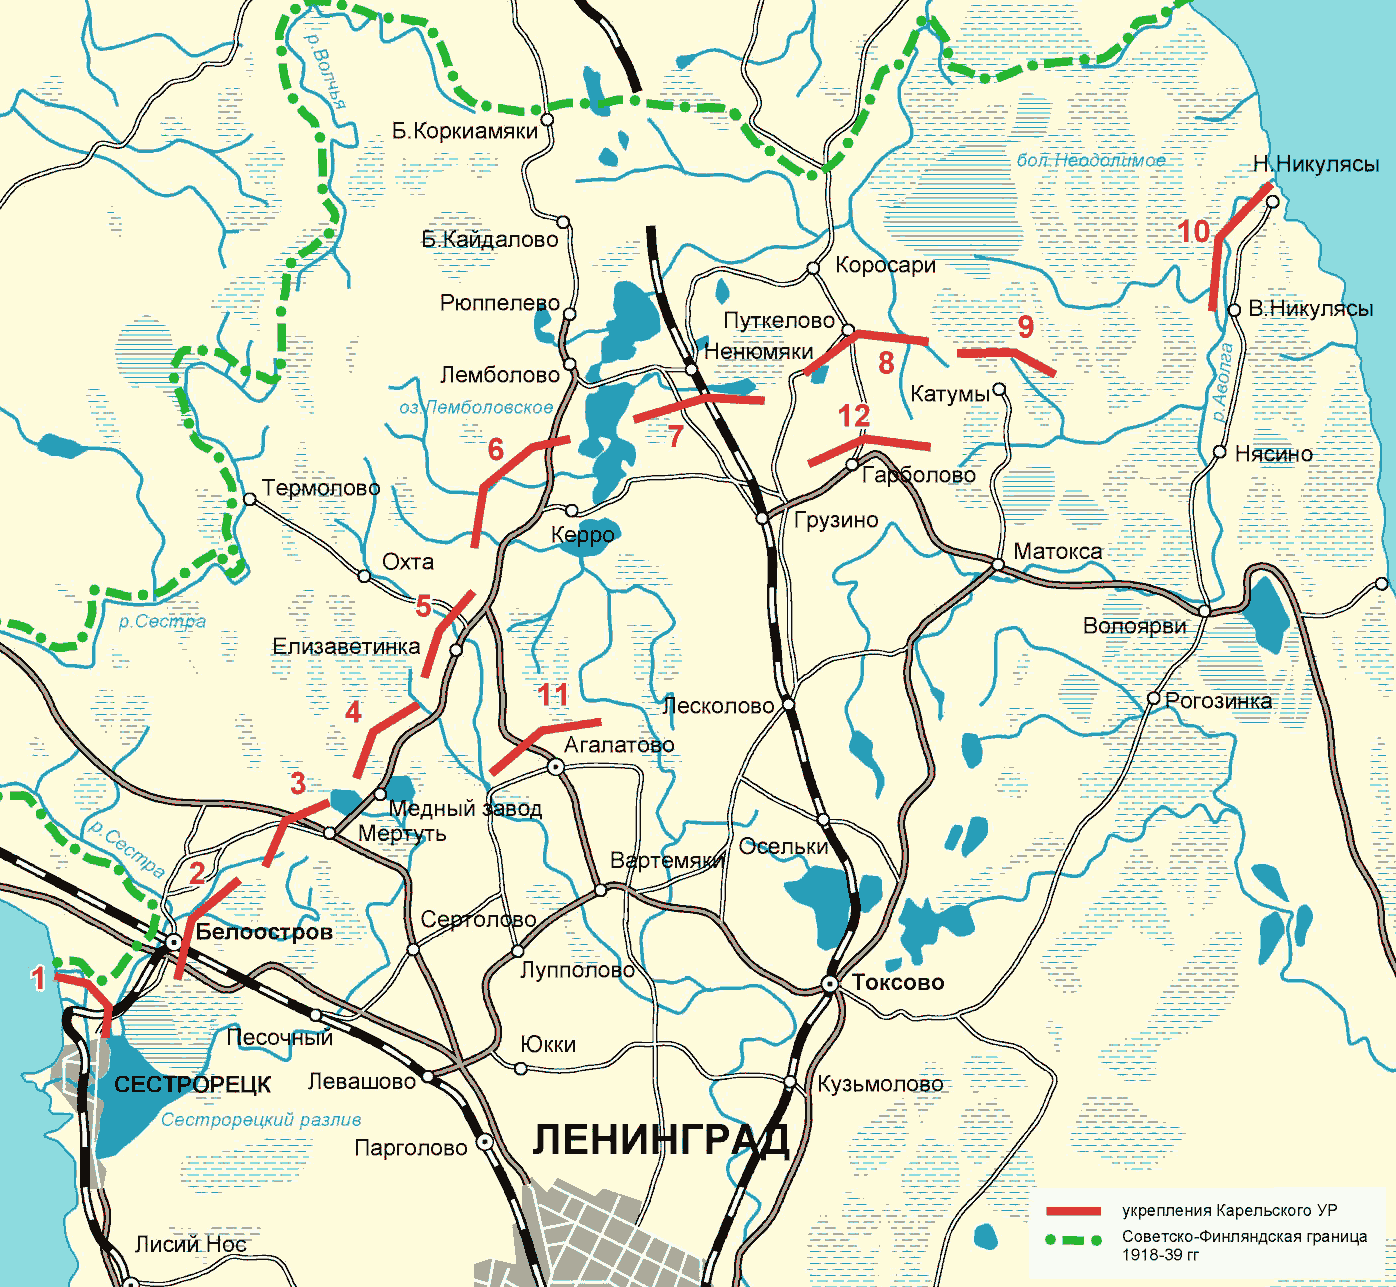 General Plan of Karelian Fortified Area (KaUR) (58 kb)